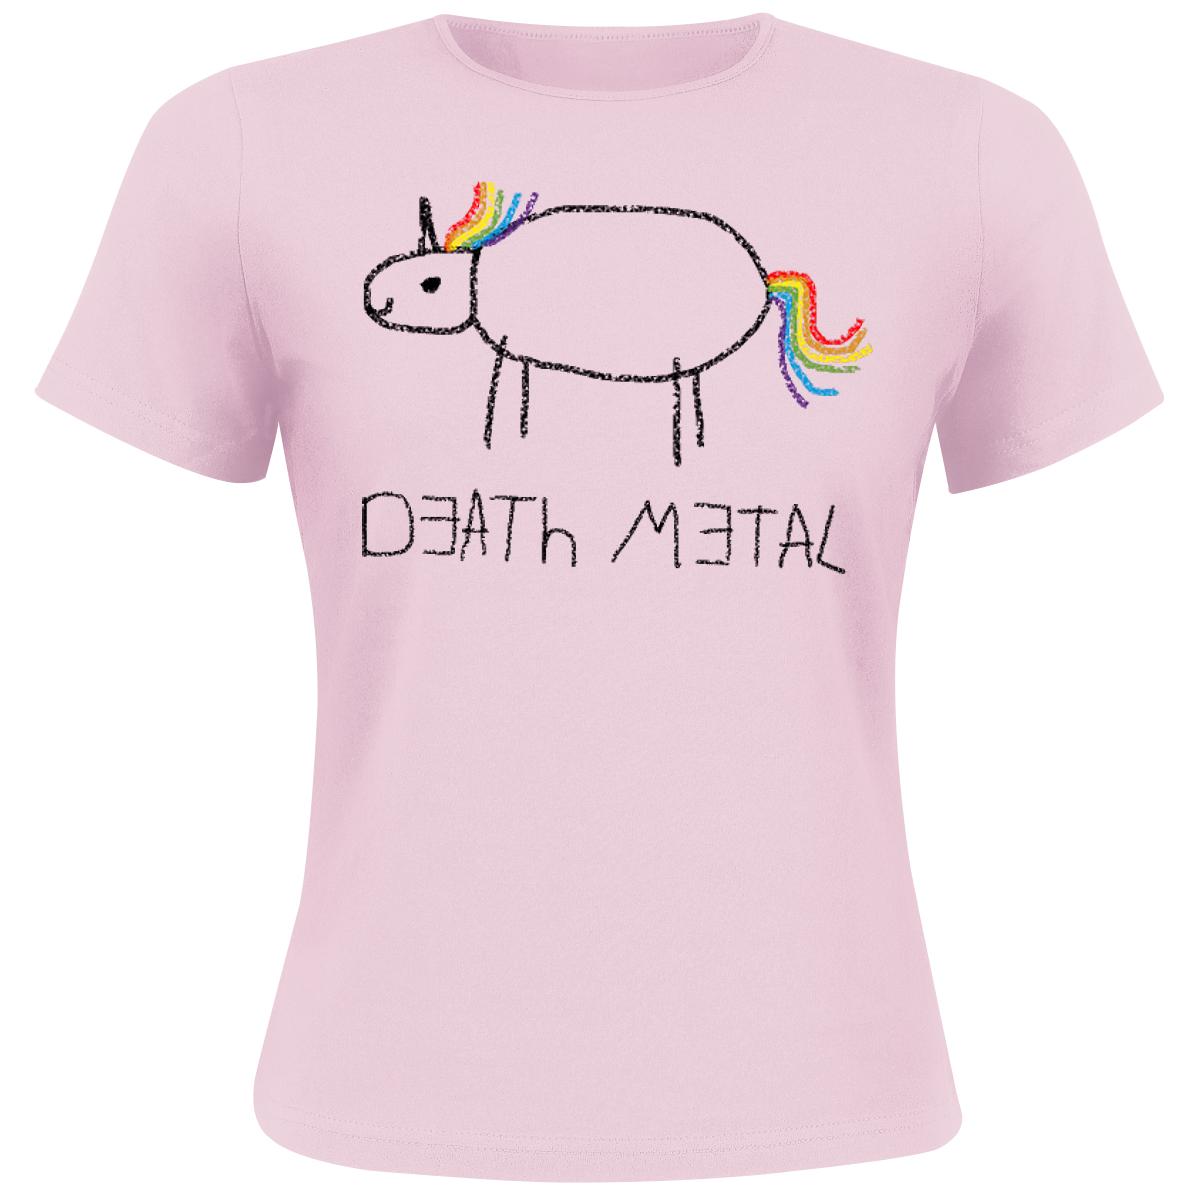 Death Metal T-shirt Design - Fancy T-shirts